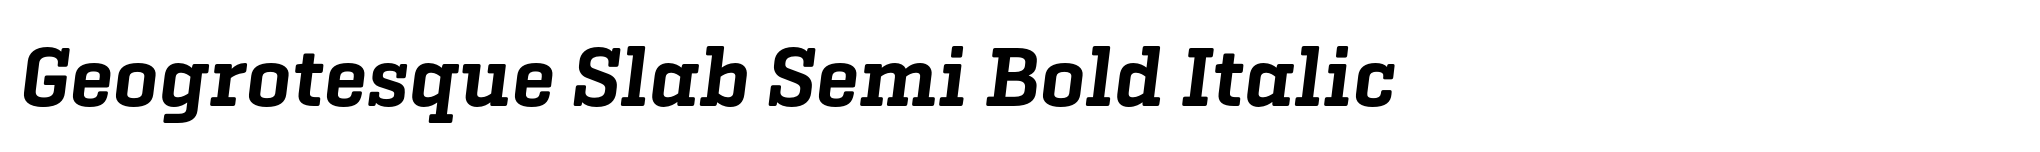 Geogrotesque Slab Semi Bold Italic image